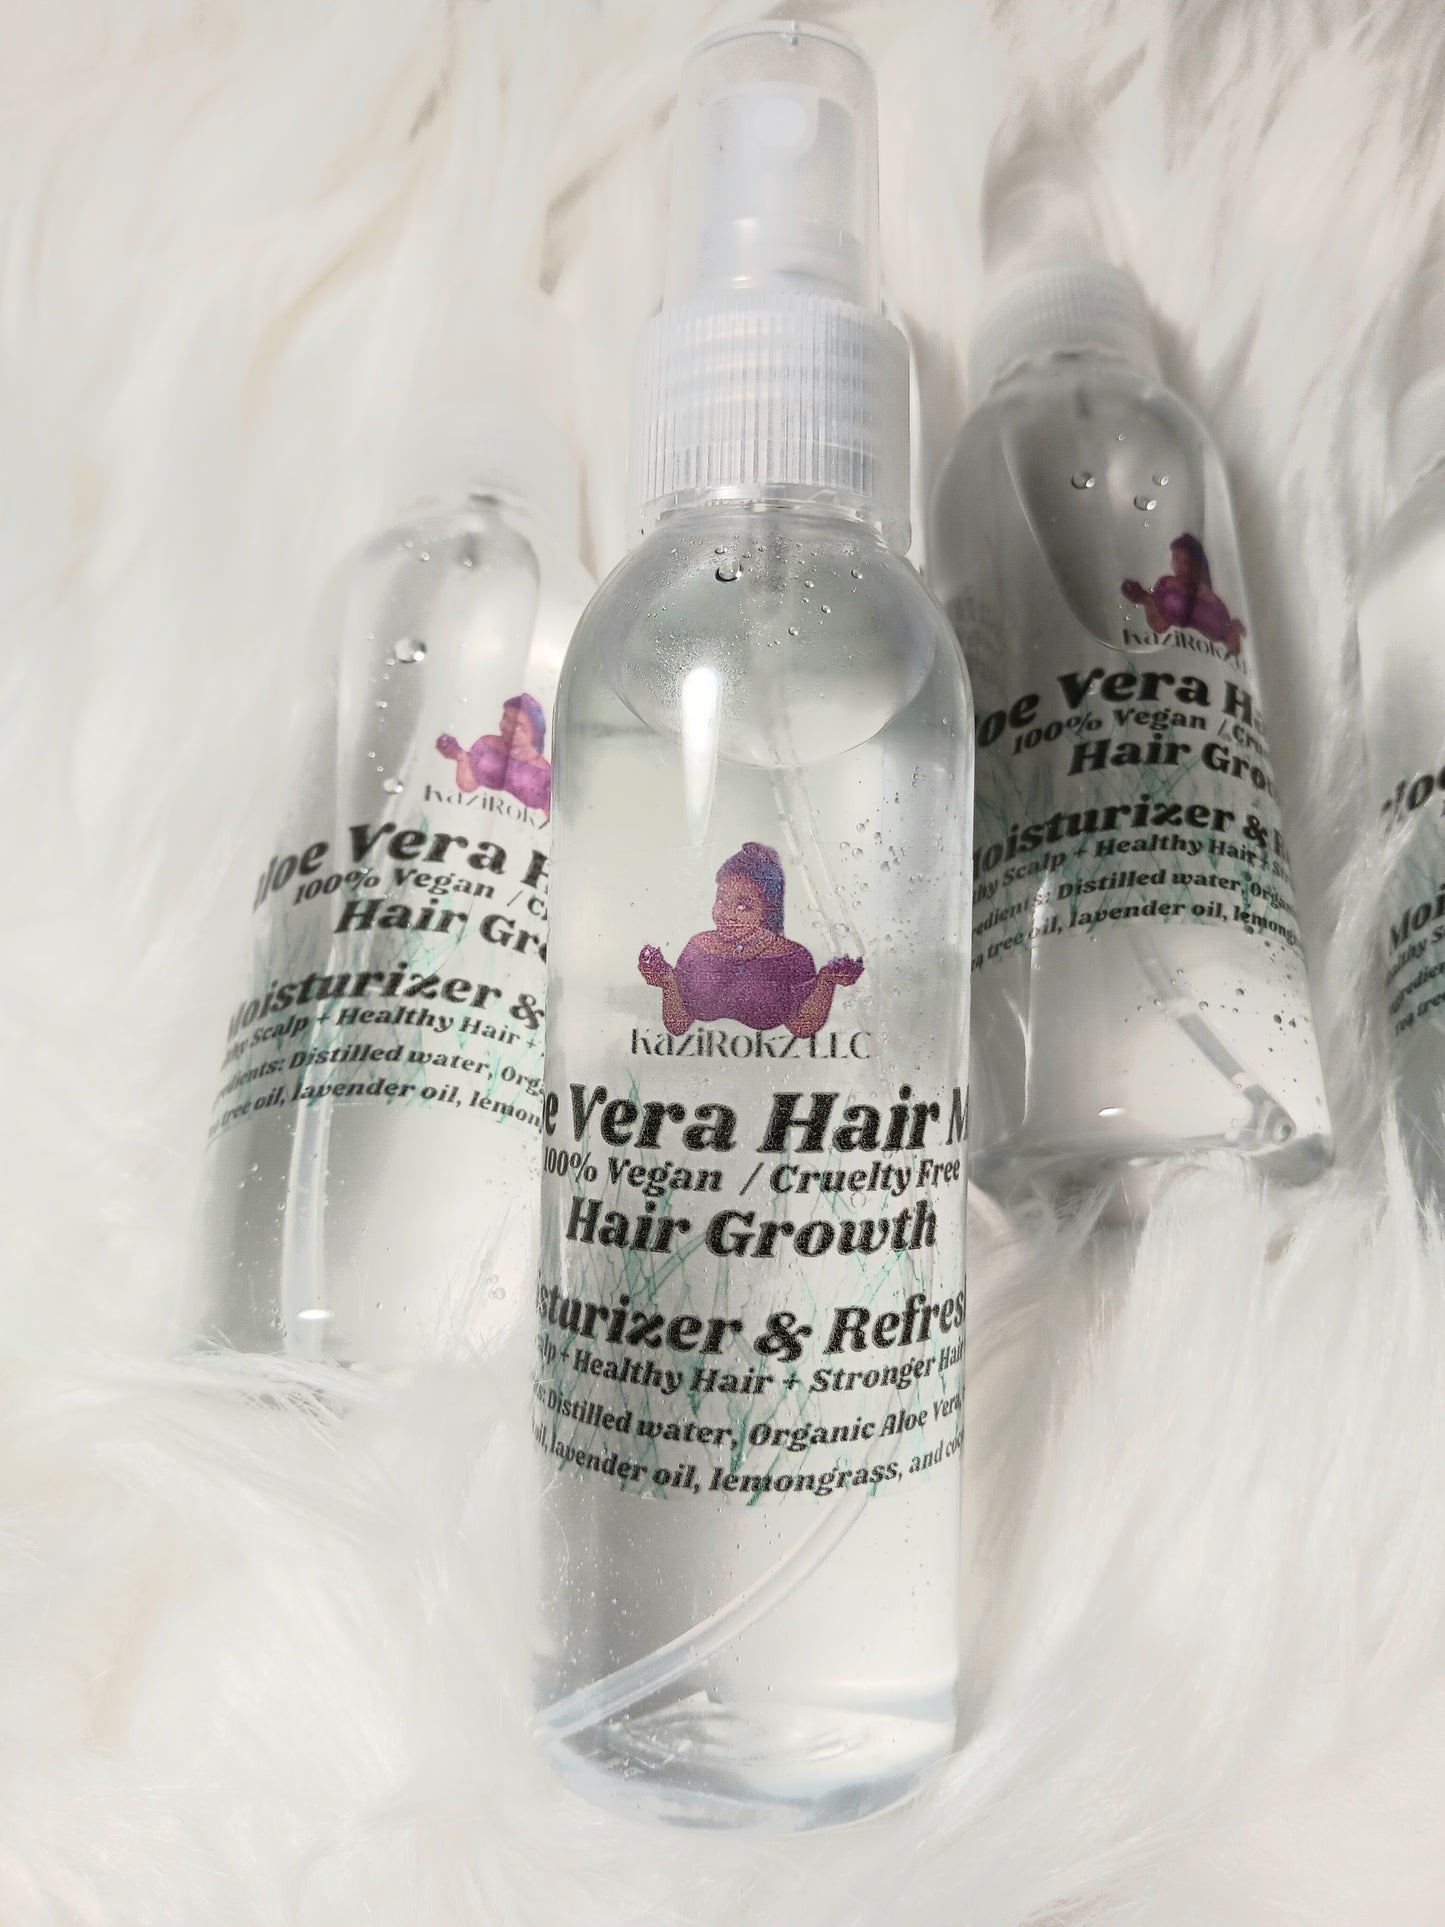 Aloe Vera Hair Mist / Dry Shampoo (100% Vegan/ CrueltyFree) Hair Growth moisturizer and refresher. 4oz